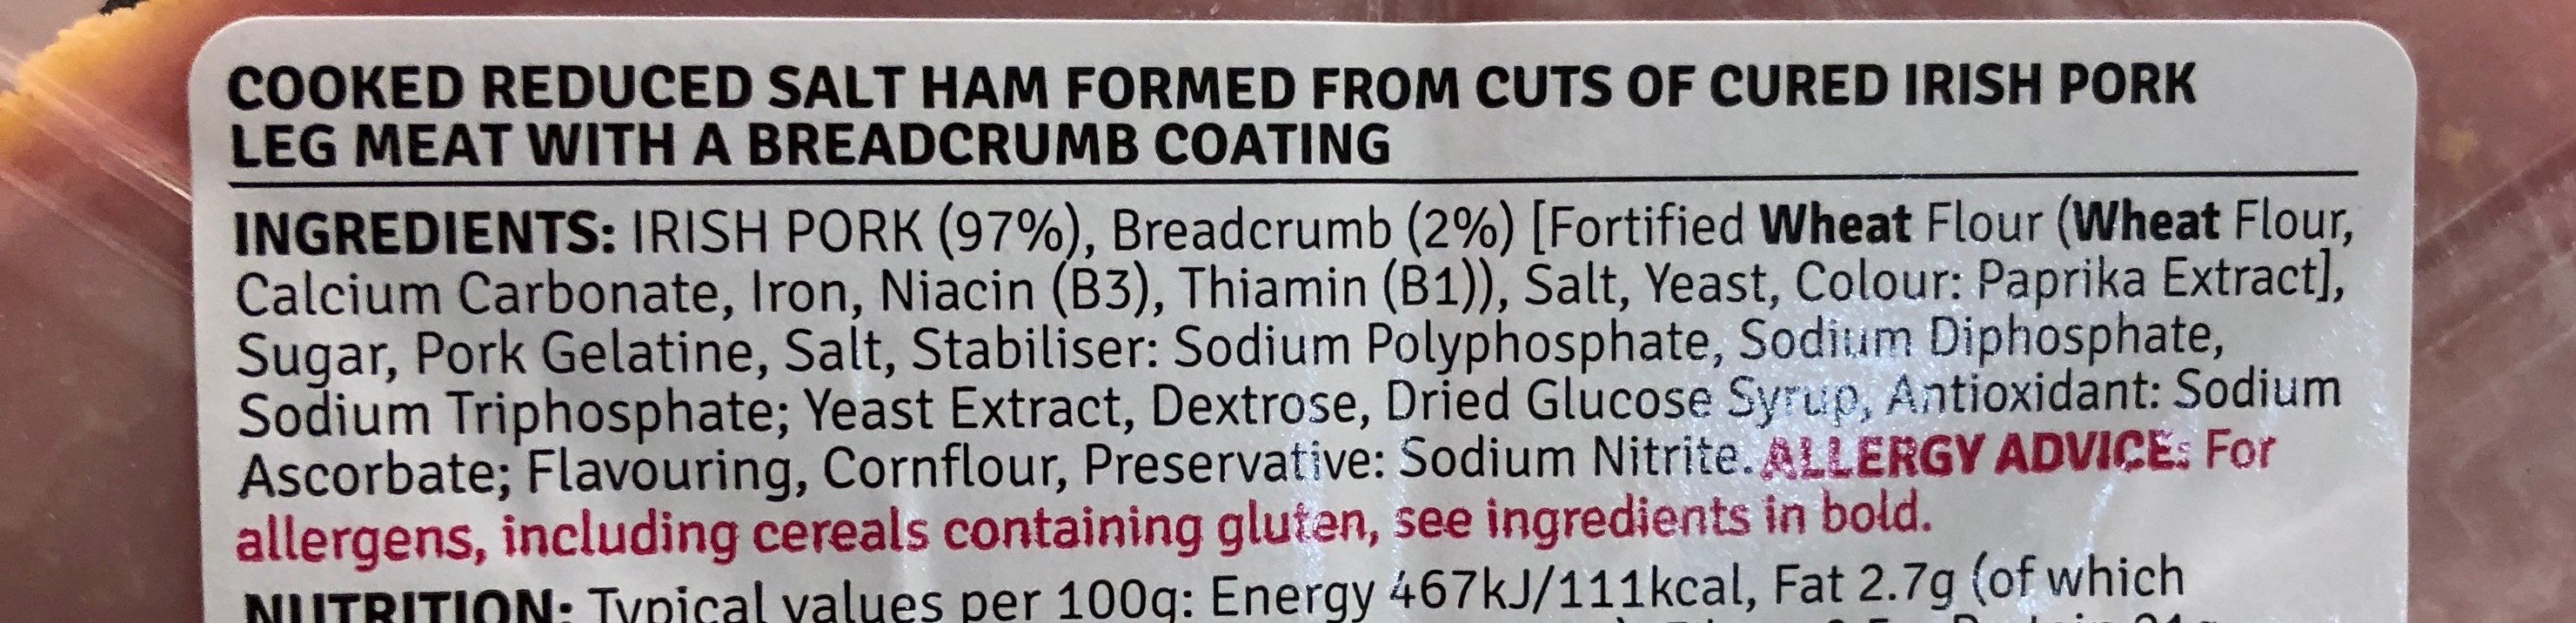 Irish Reduced Salt Crumbed Ham - Ingredients - fr